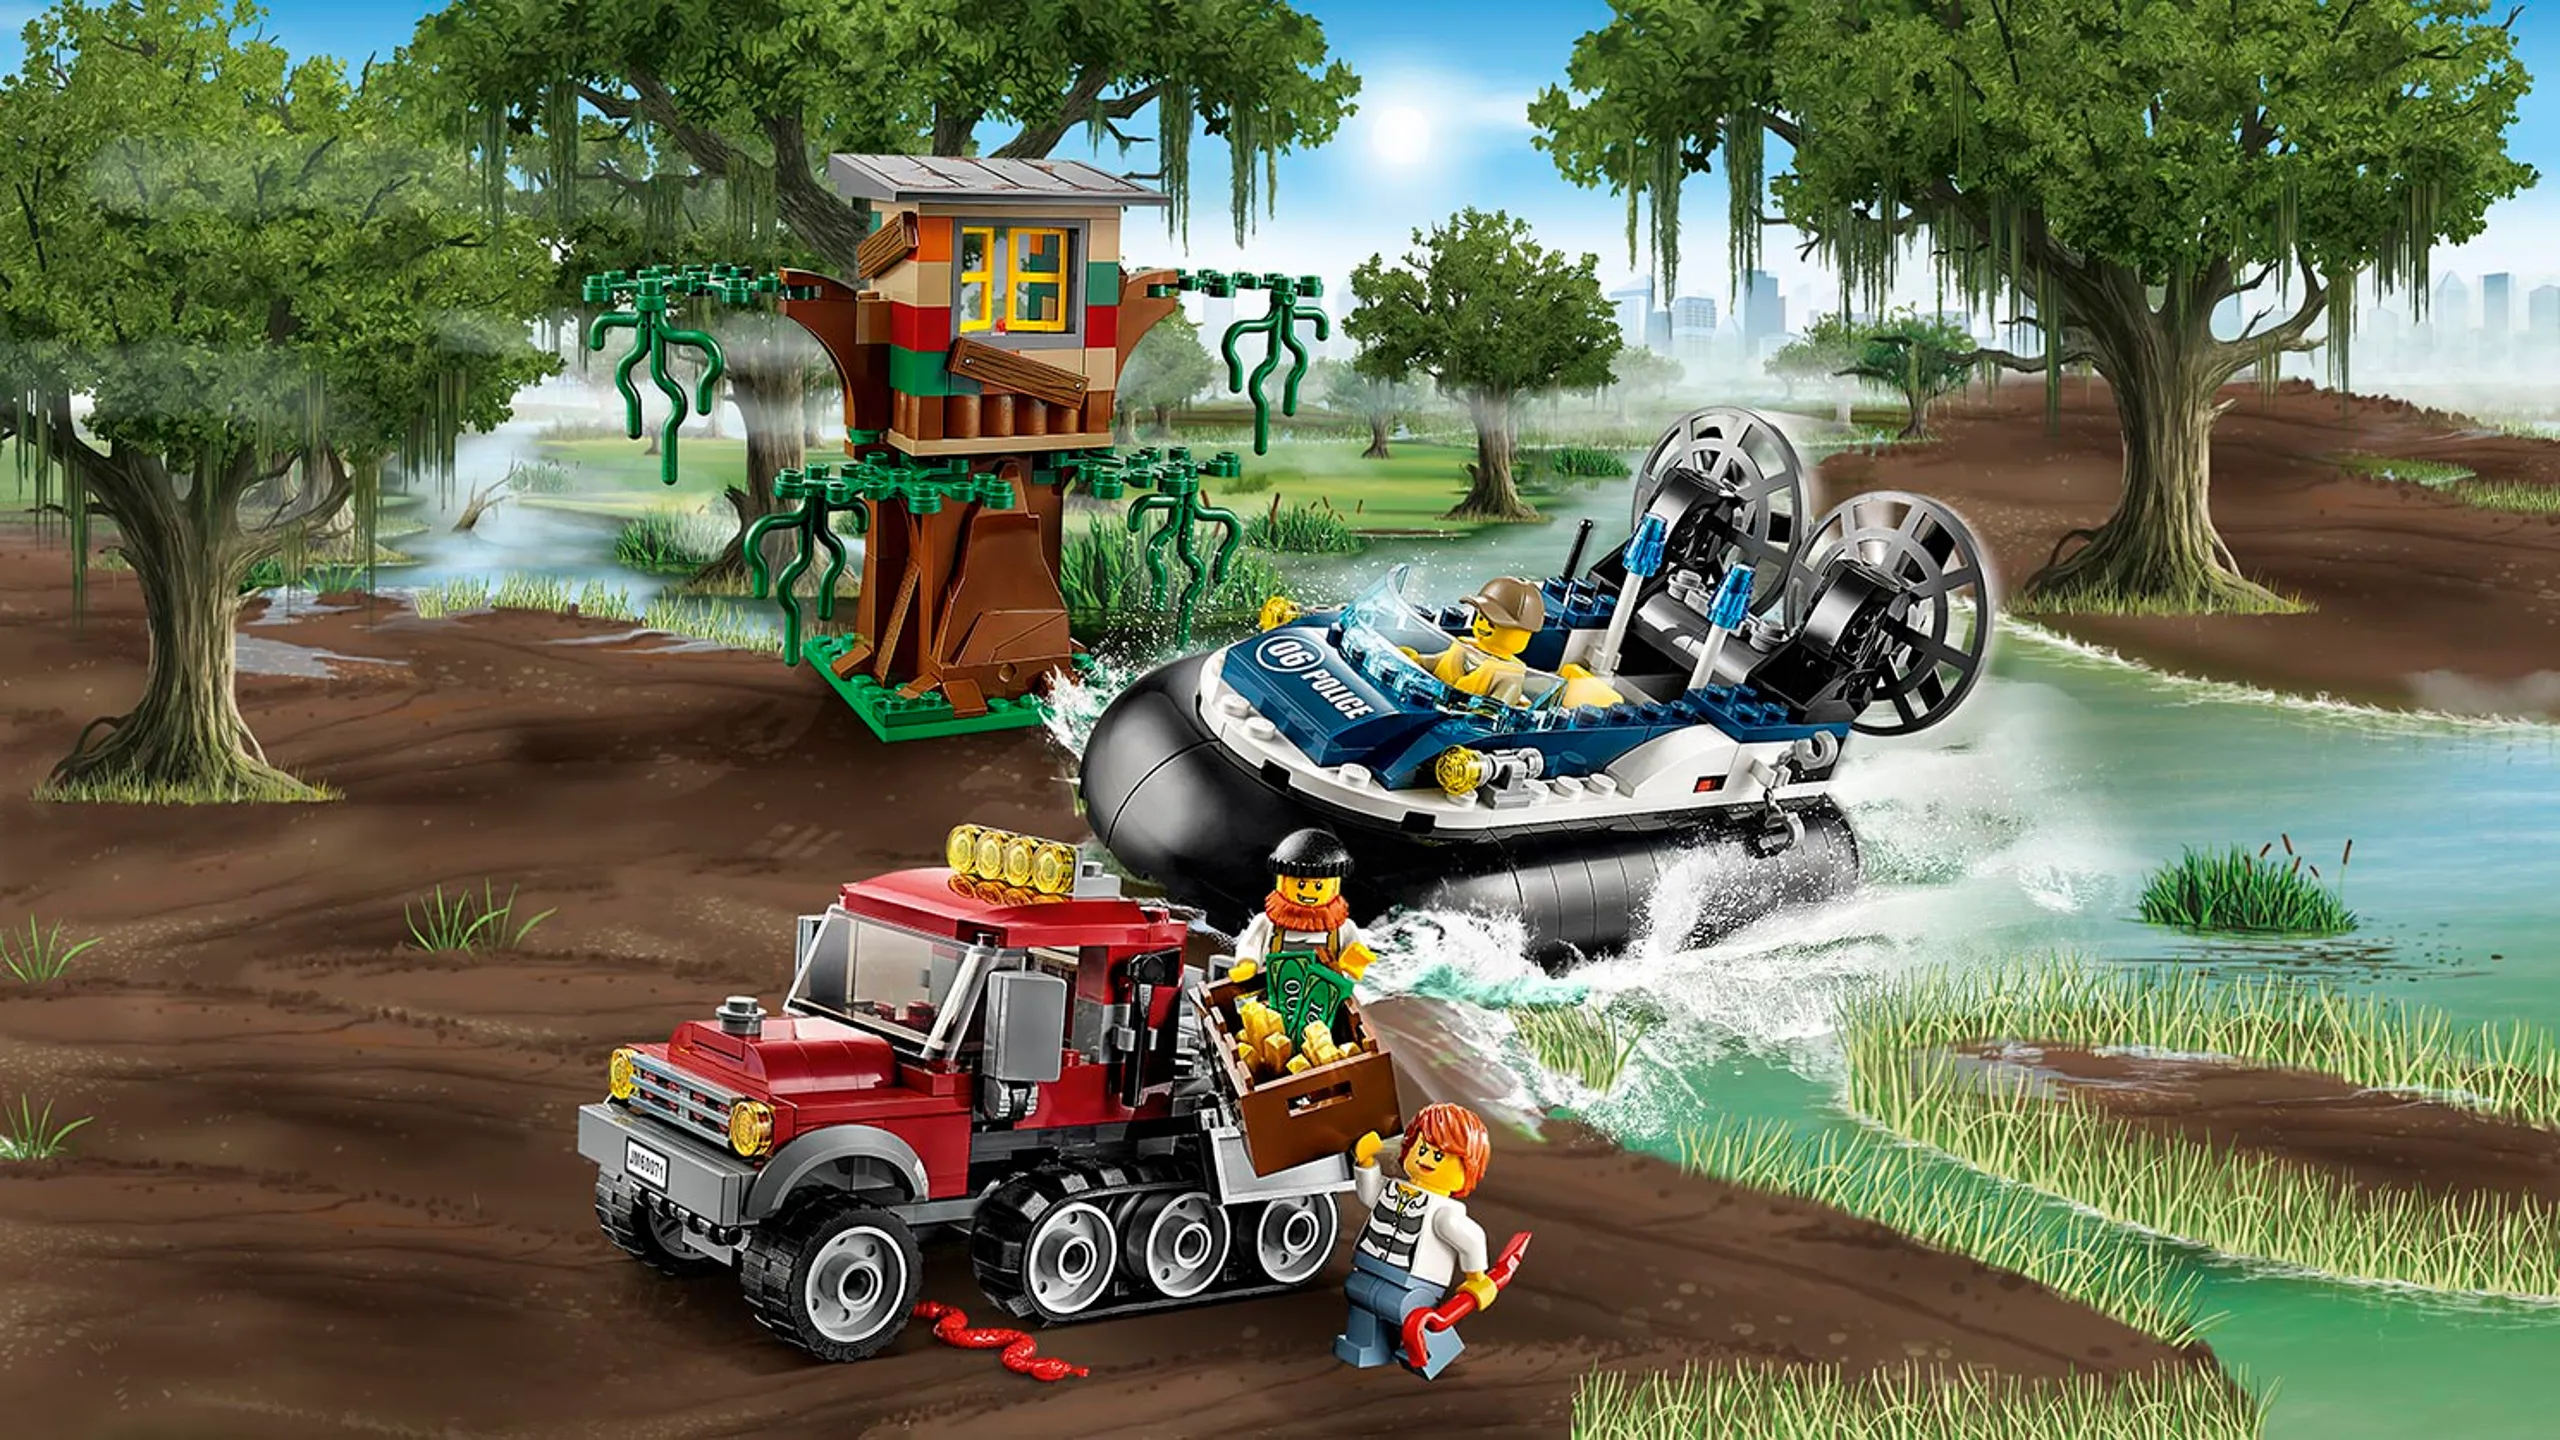 LEGO City Swamp Police chase - Hovercraft Arrest 60071